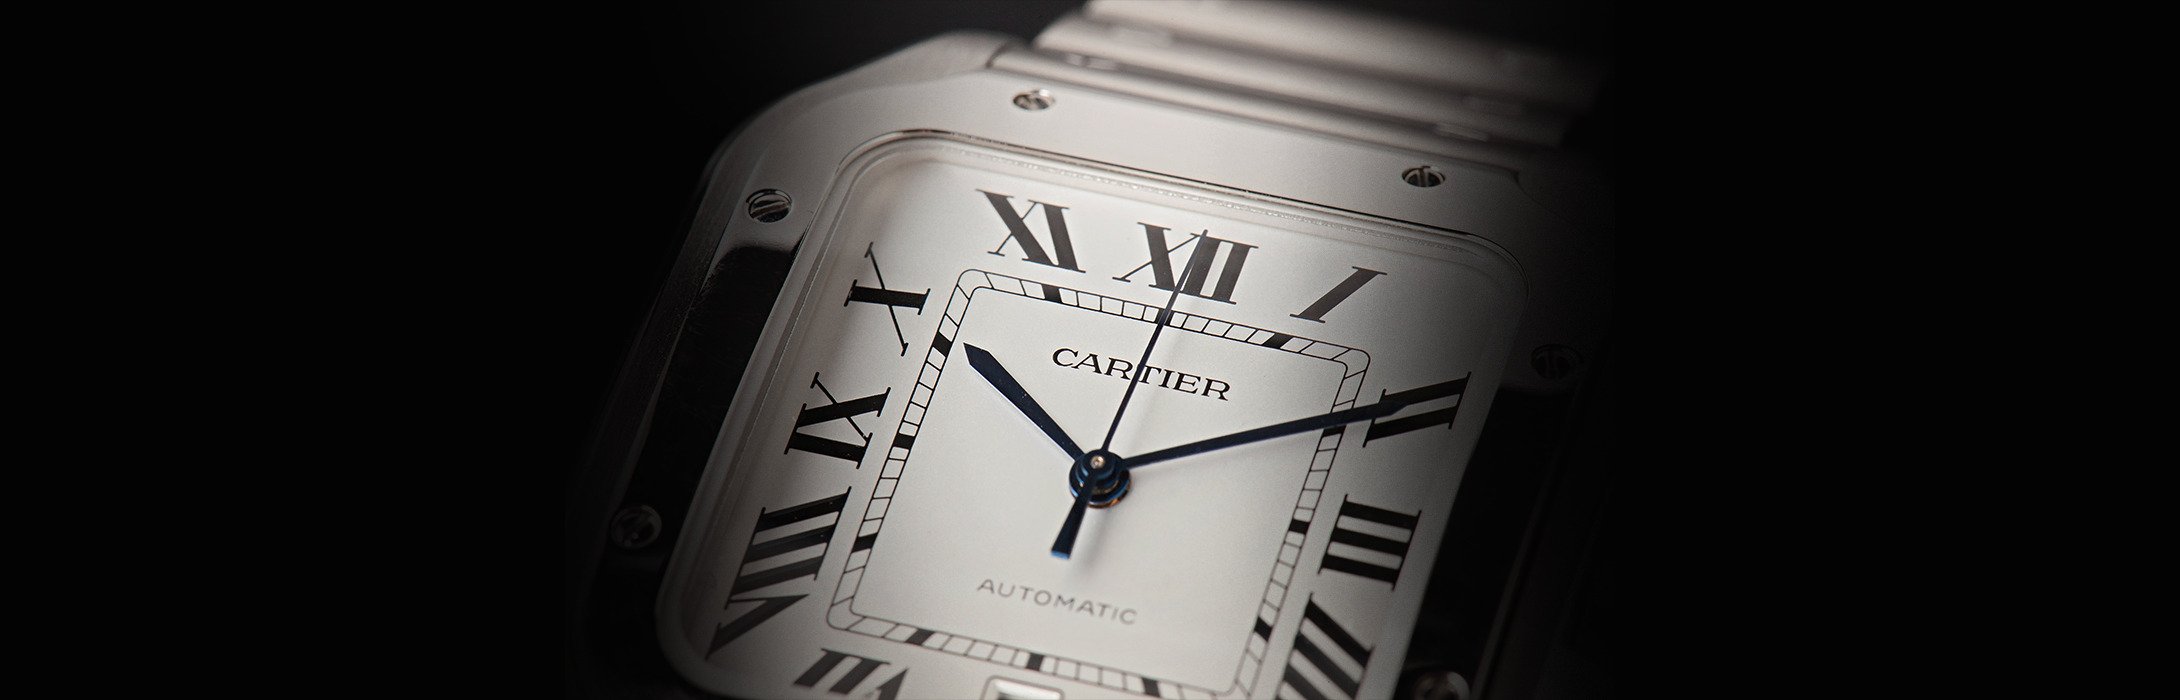 Cartier Watches For Women